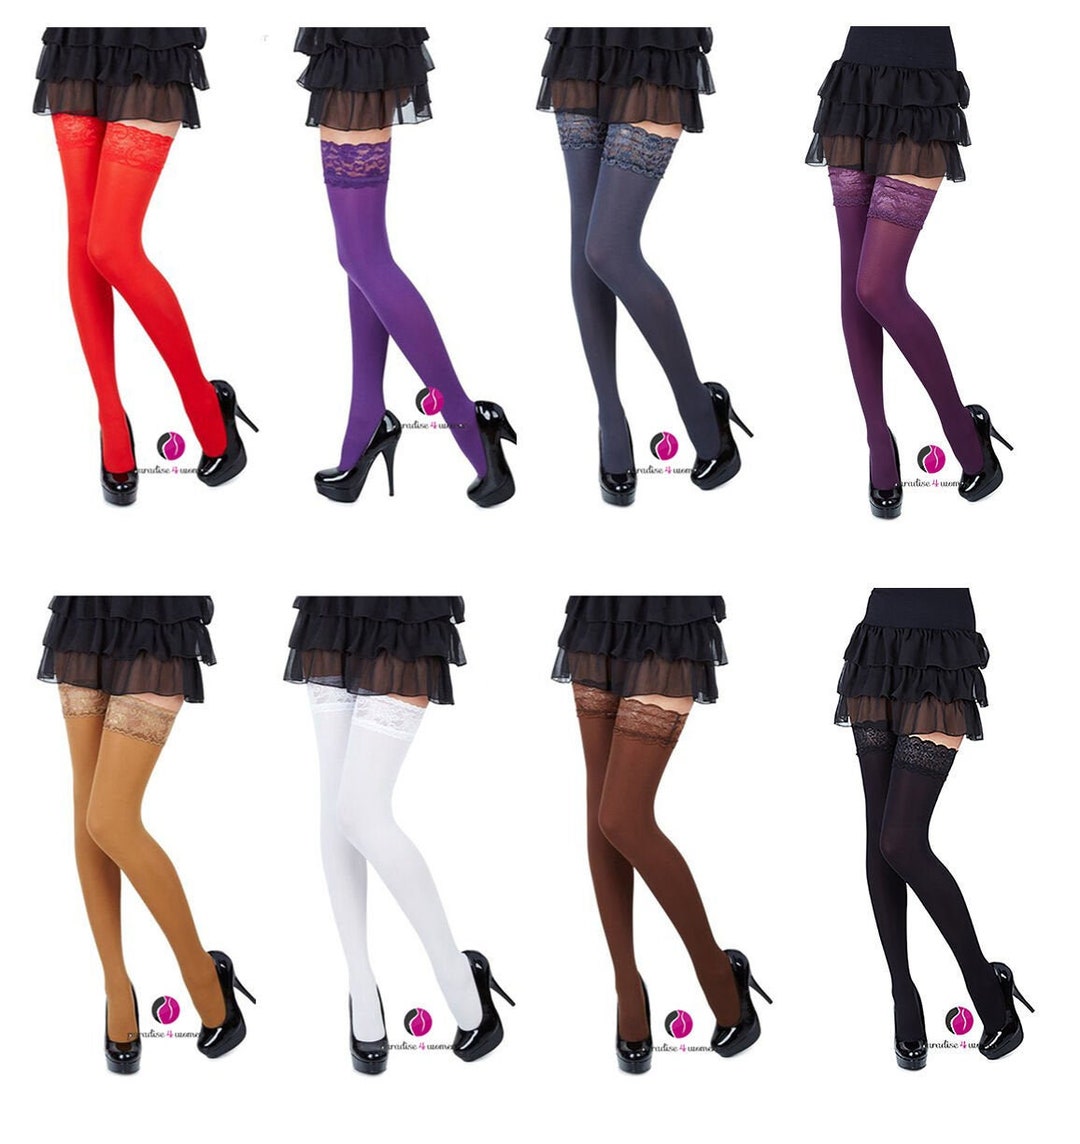 Lace Top 40 Denier Sheer Hold-ups Stockings by Sentelegri 8 Various ...